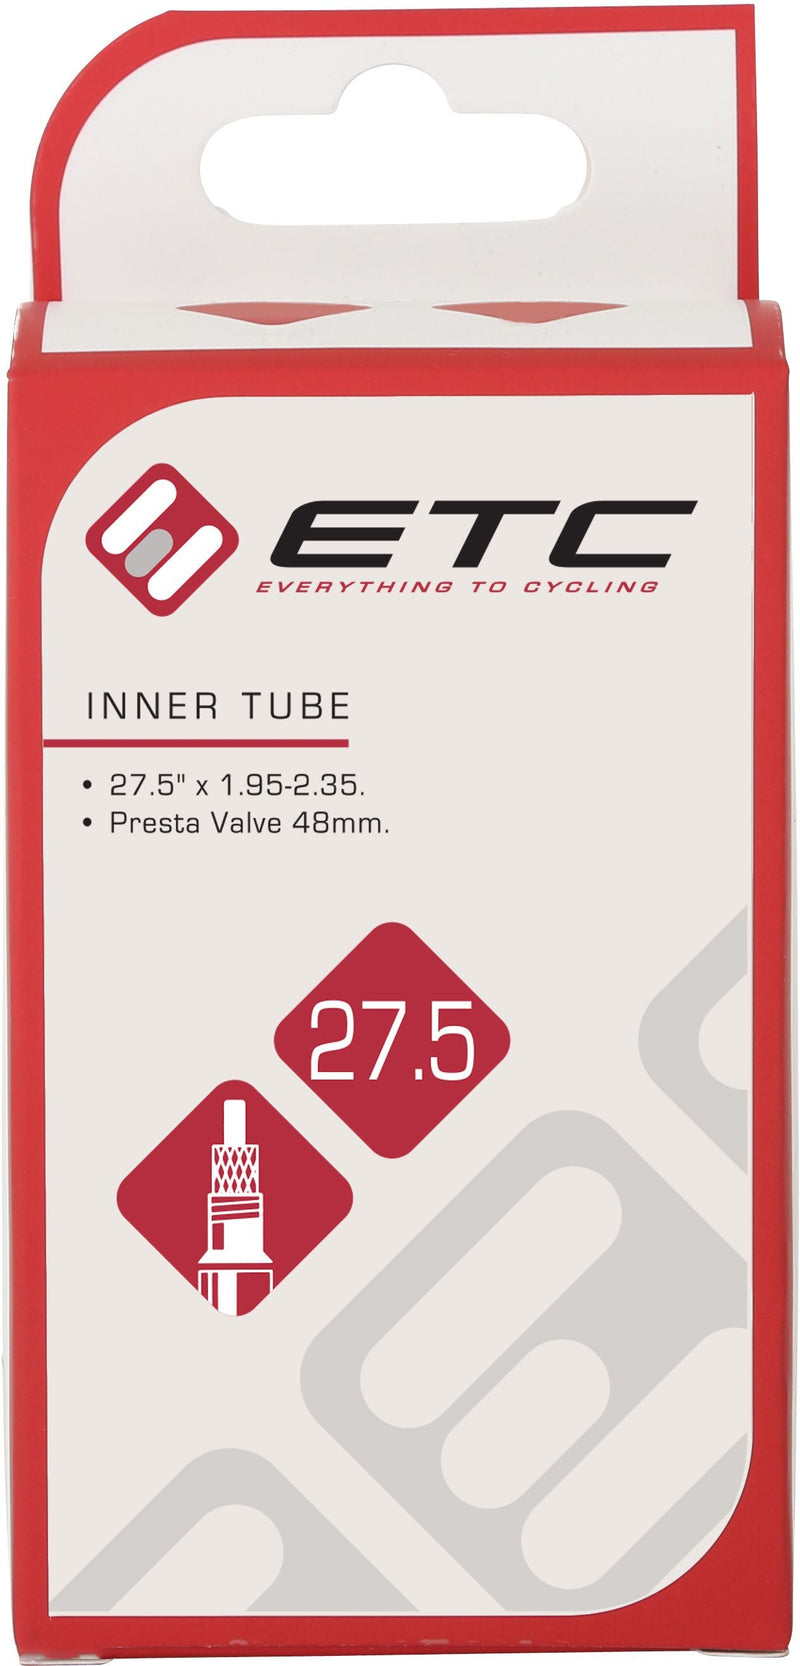 2x Bicycle InnerTubes All Sizes Schrader and Presta Valve - Premium Bike Inner Tubes (Pair)